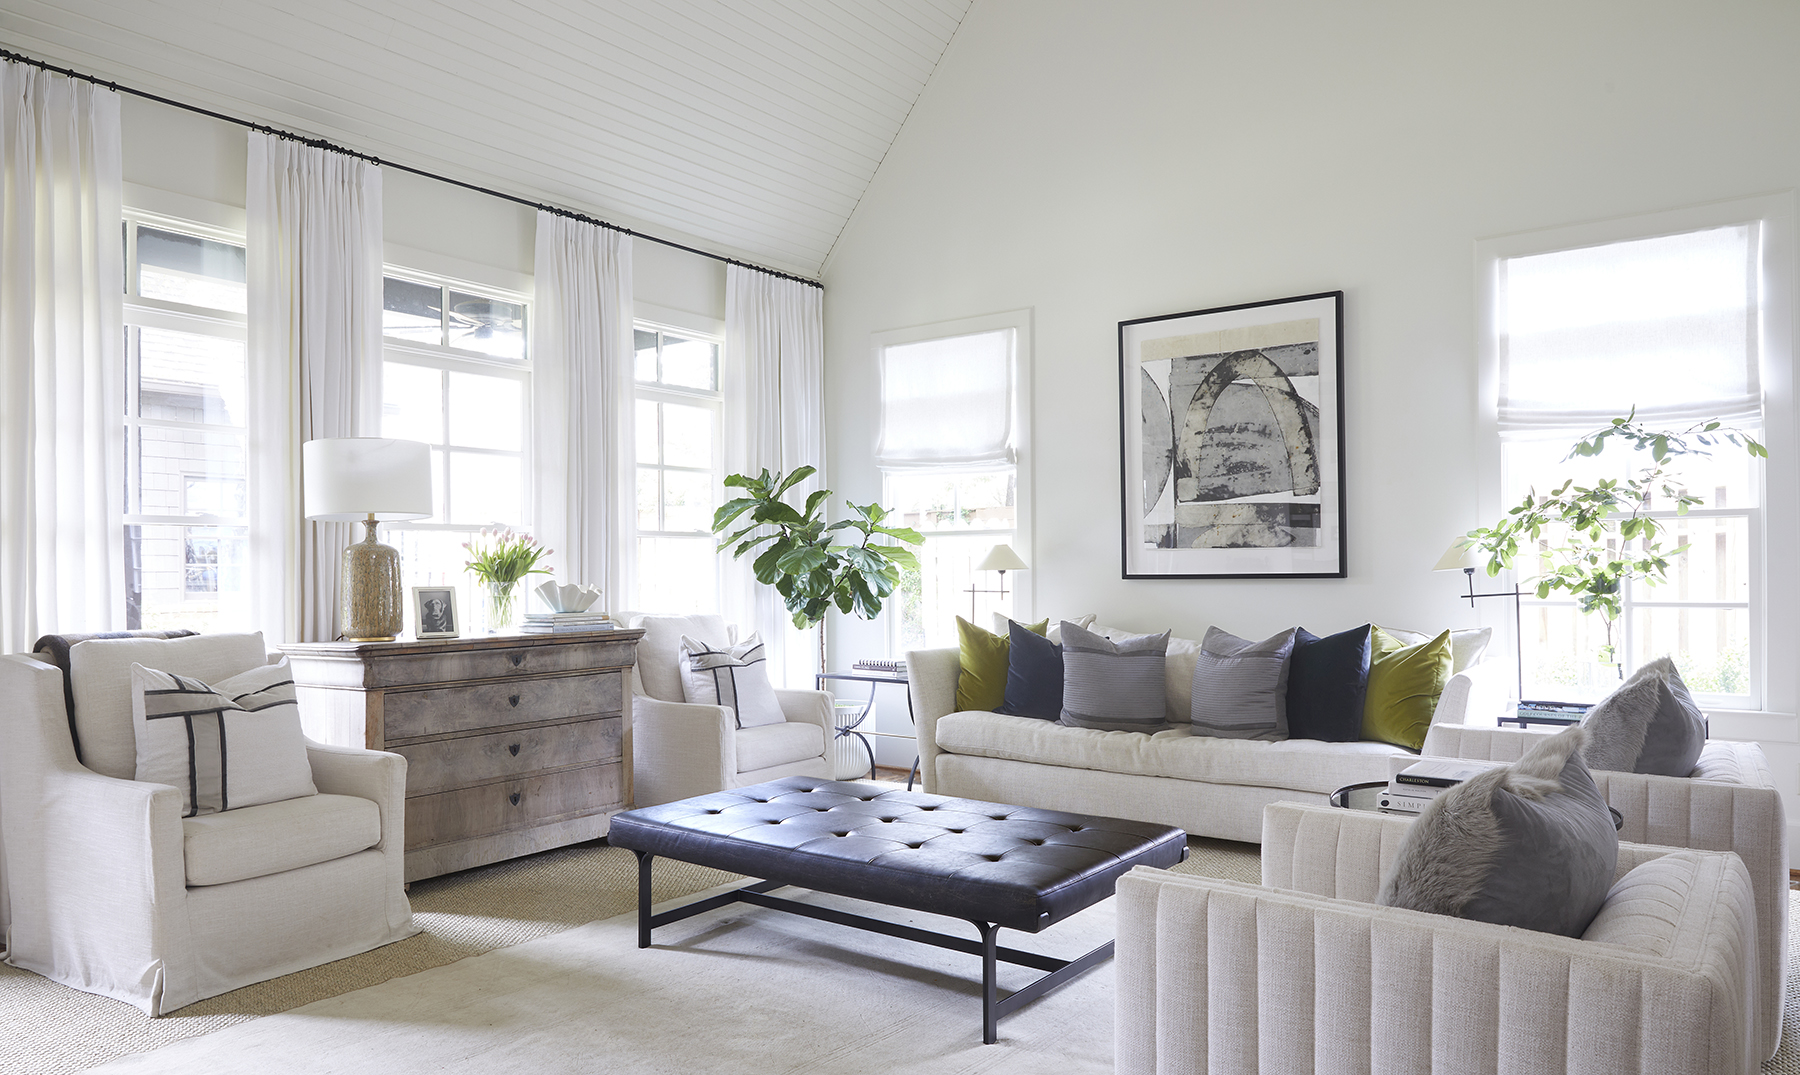 Light and airy living room designed by Caylee Stefanek.